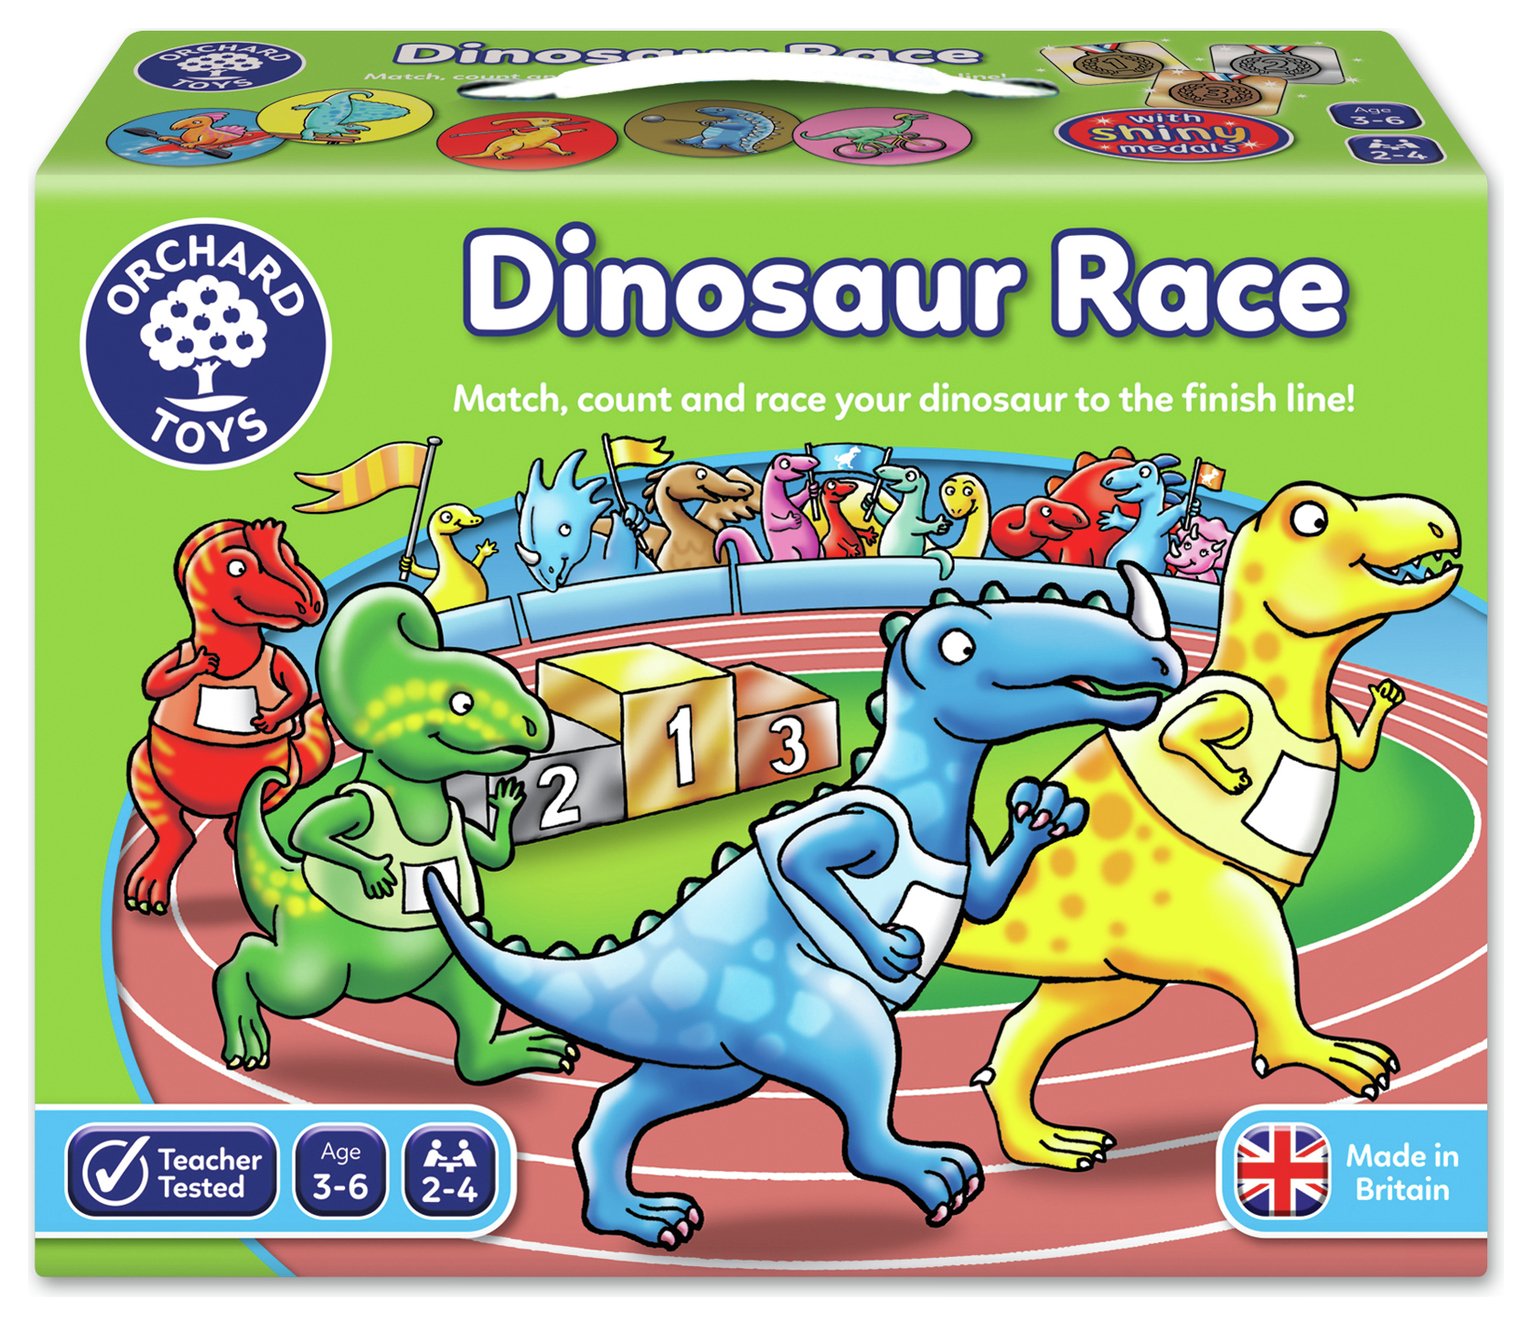 Dinosaur Race Board Game Reviews